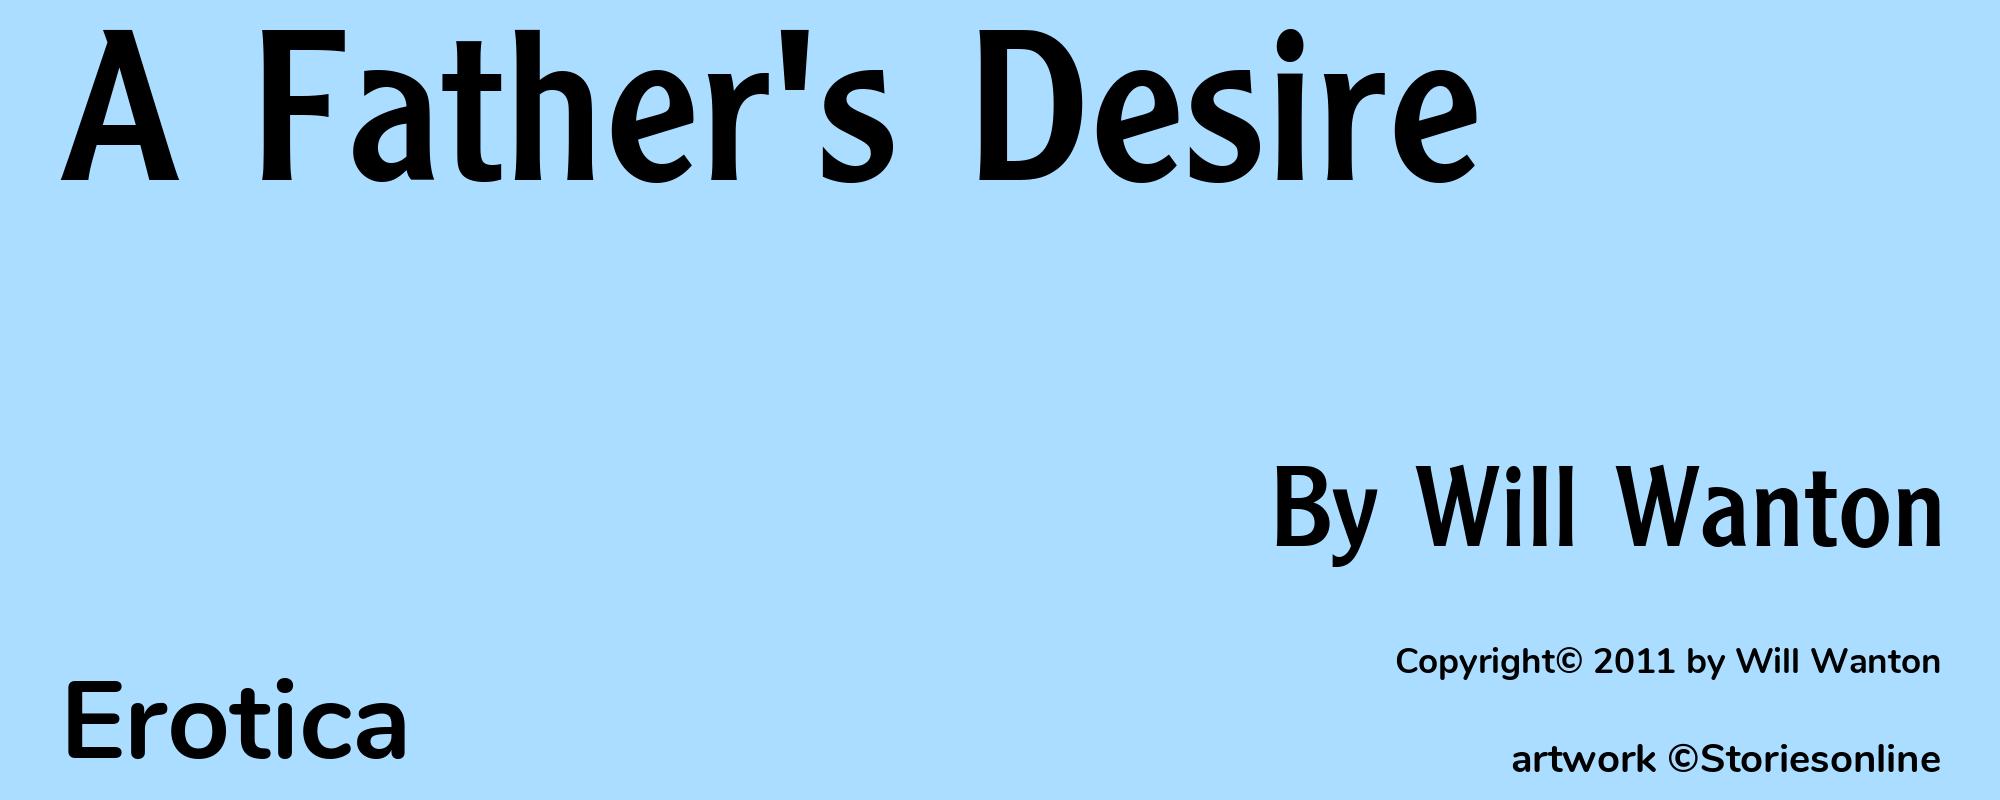 A Father's Desire - Cover